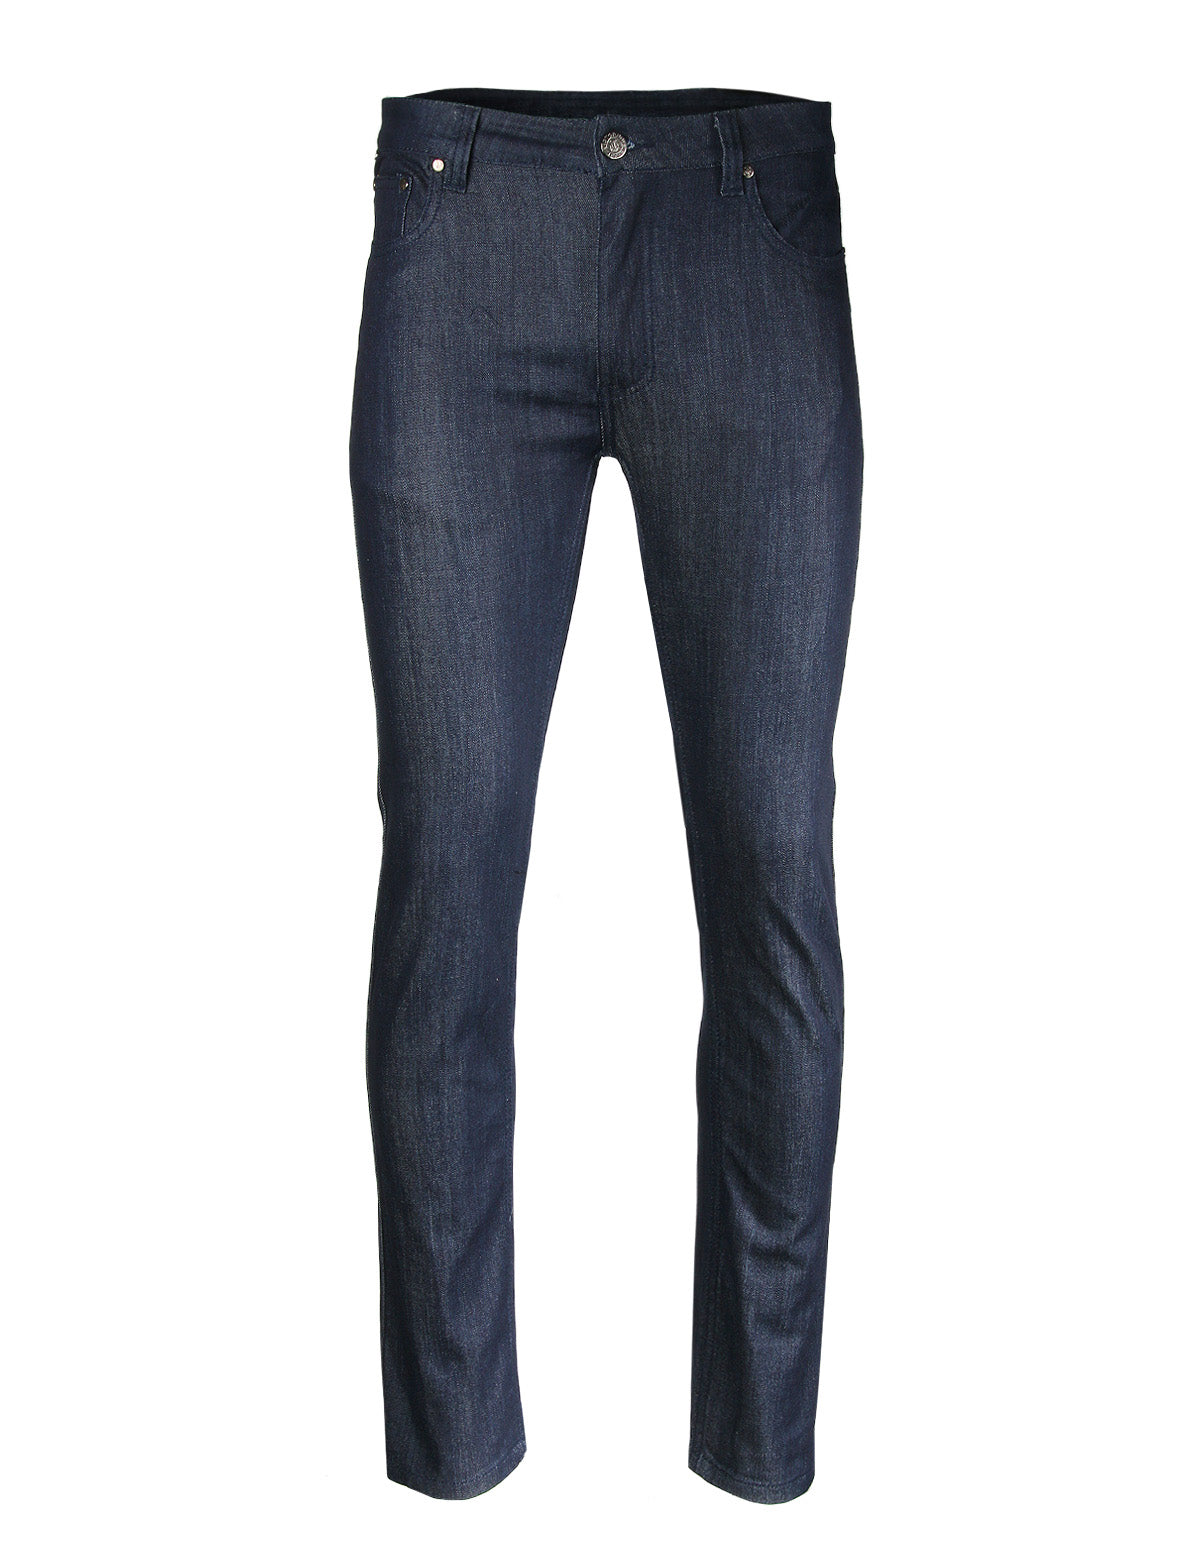 Full Blue Men's Regular Fit 5 Pocket Cotton Jeans | Medium Wash 32W x 30L